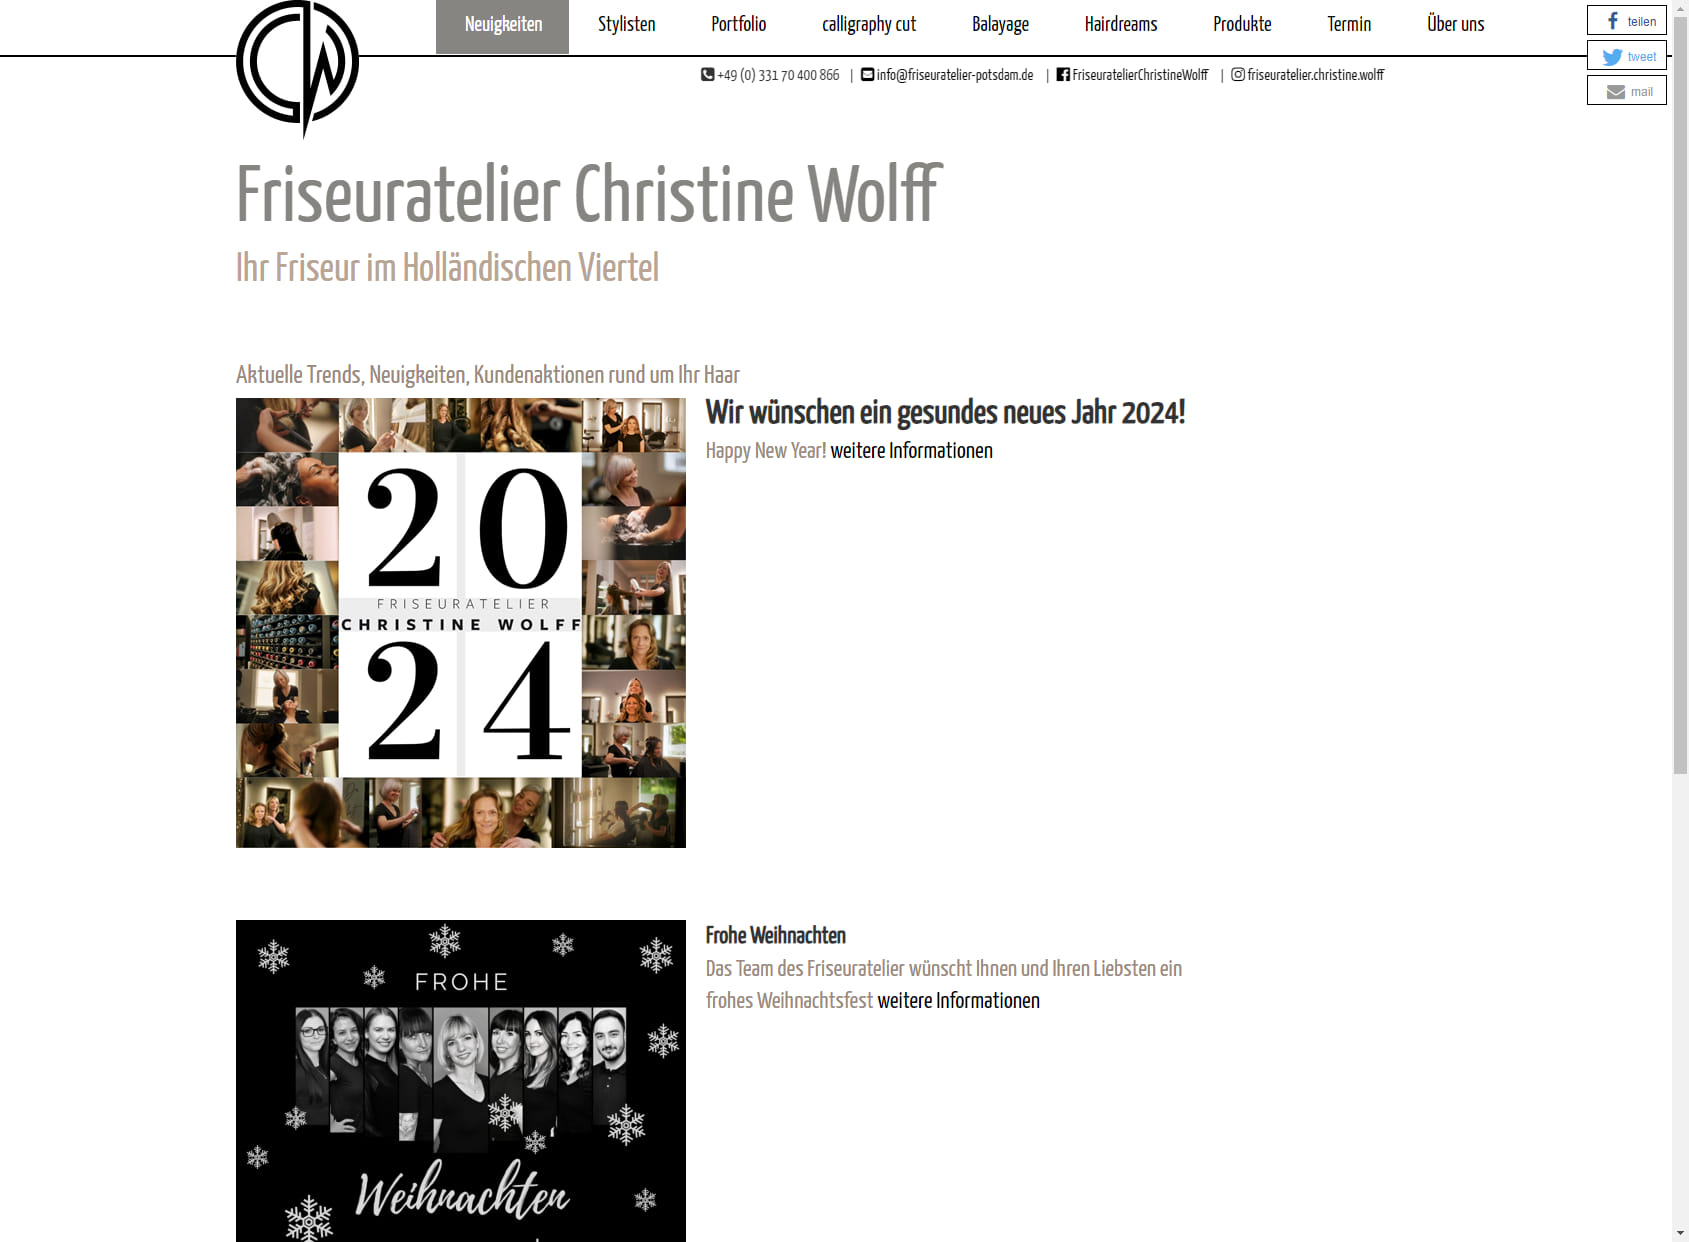 Friseuratelier Christine Wolff